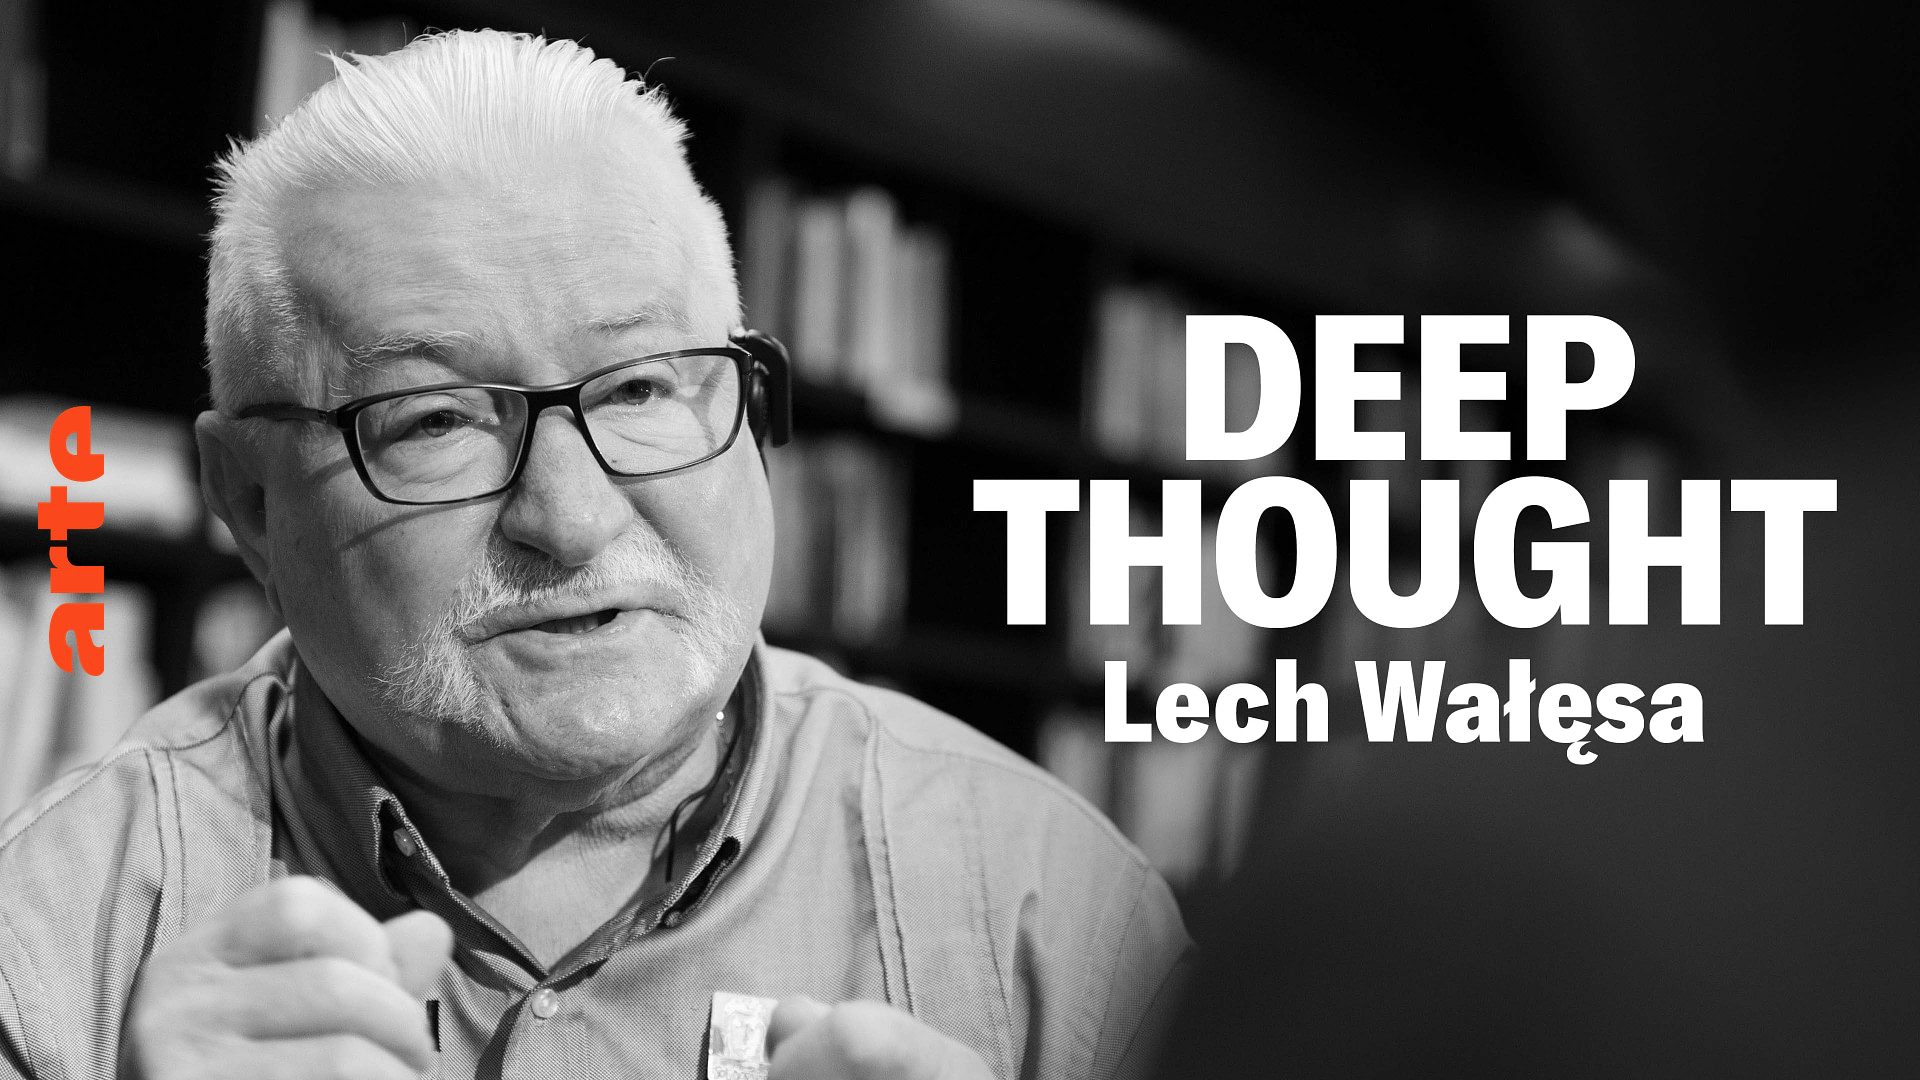 Deep thought – Das große Gespräch mit Lech Walesa